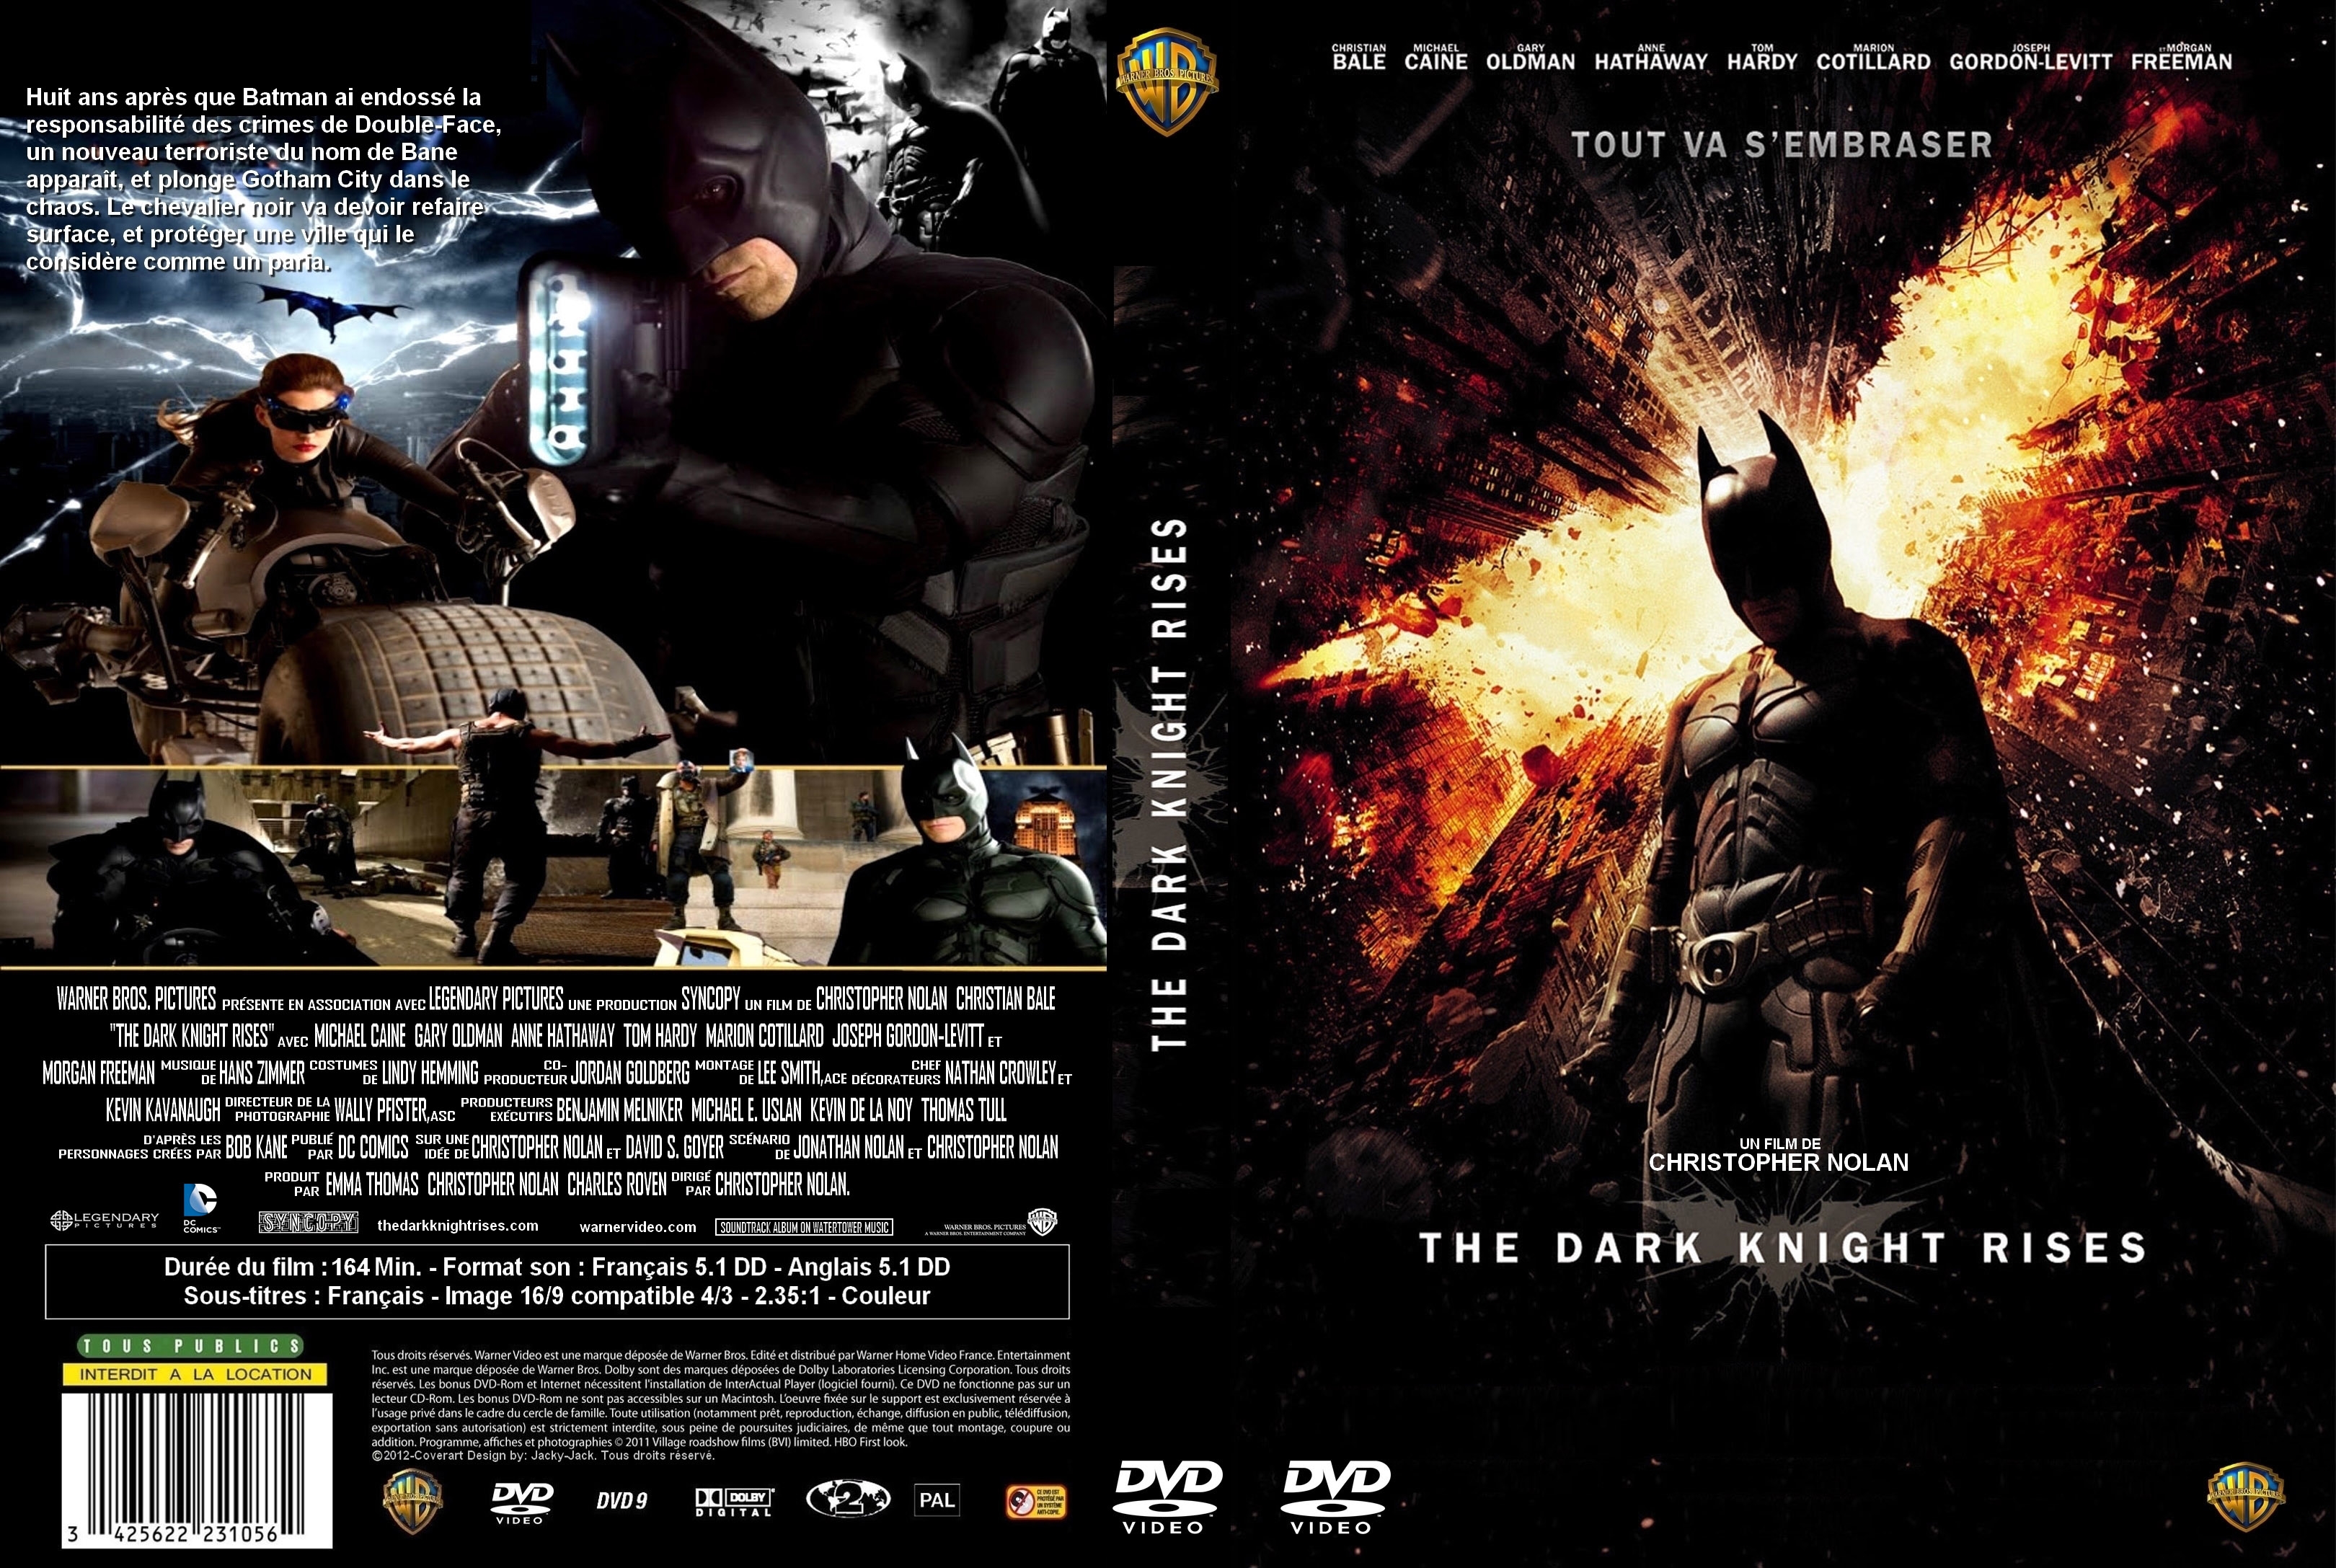 Jaquette DVD The dark knight rises custom